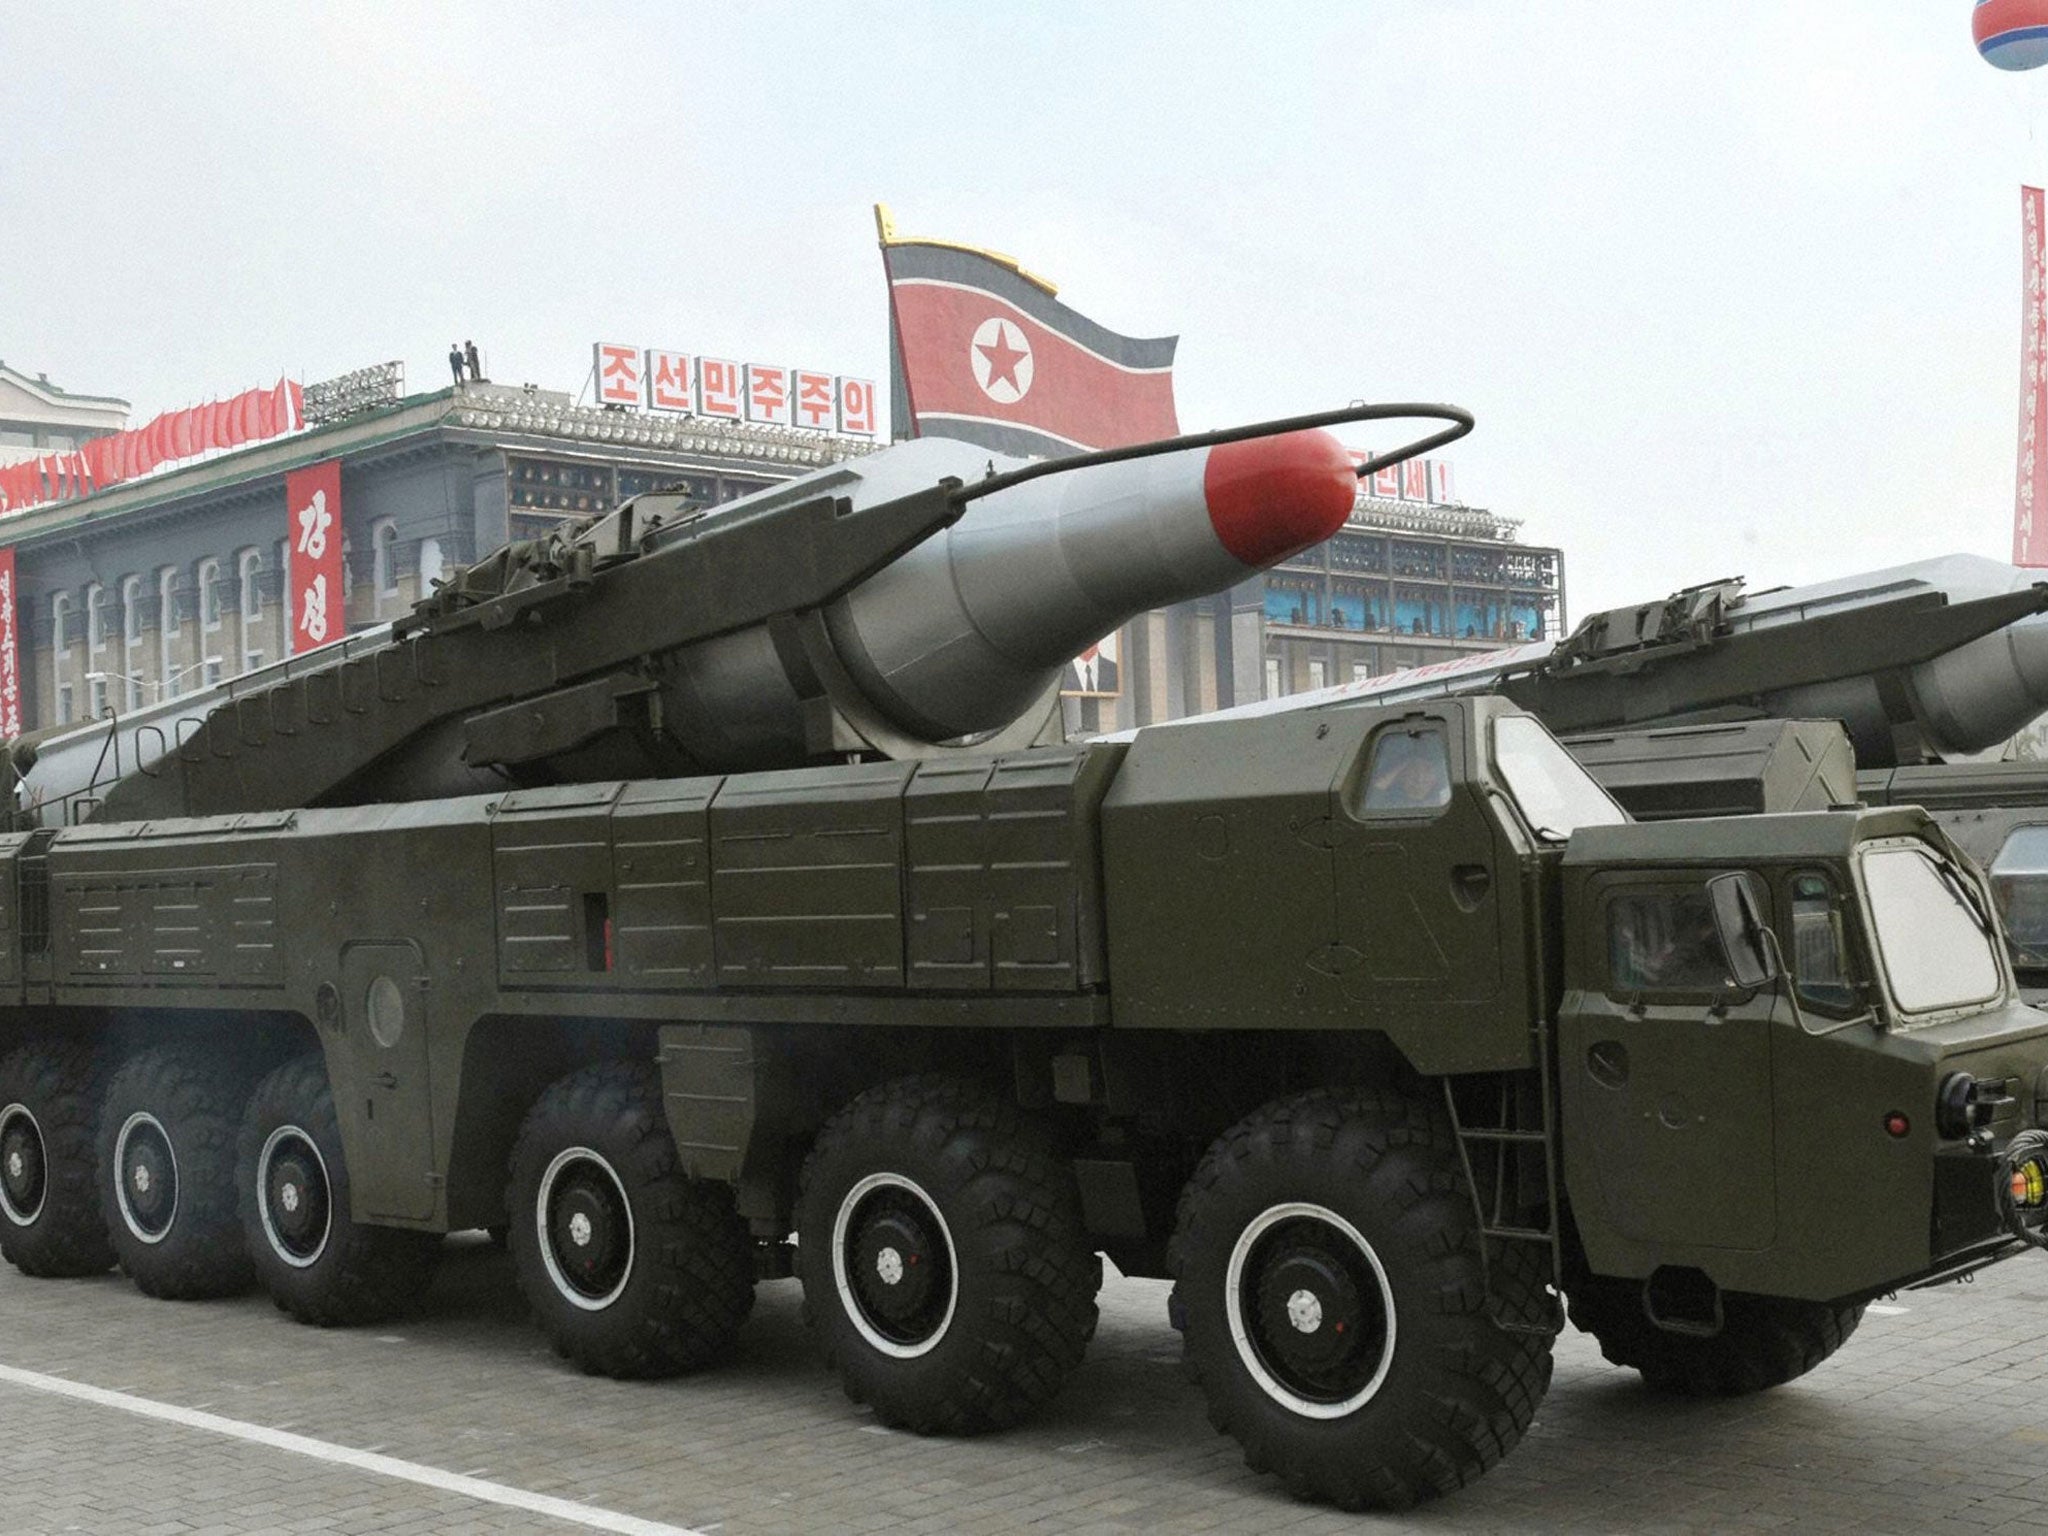 North Korea has long paraded its military might